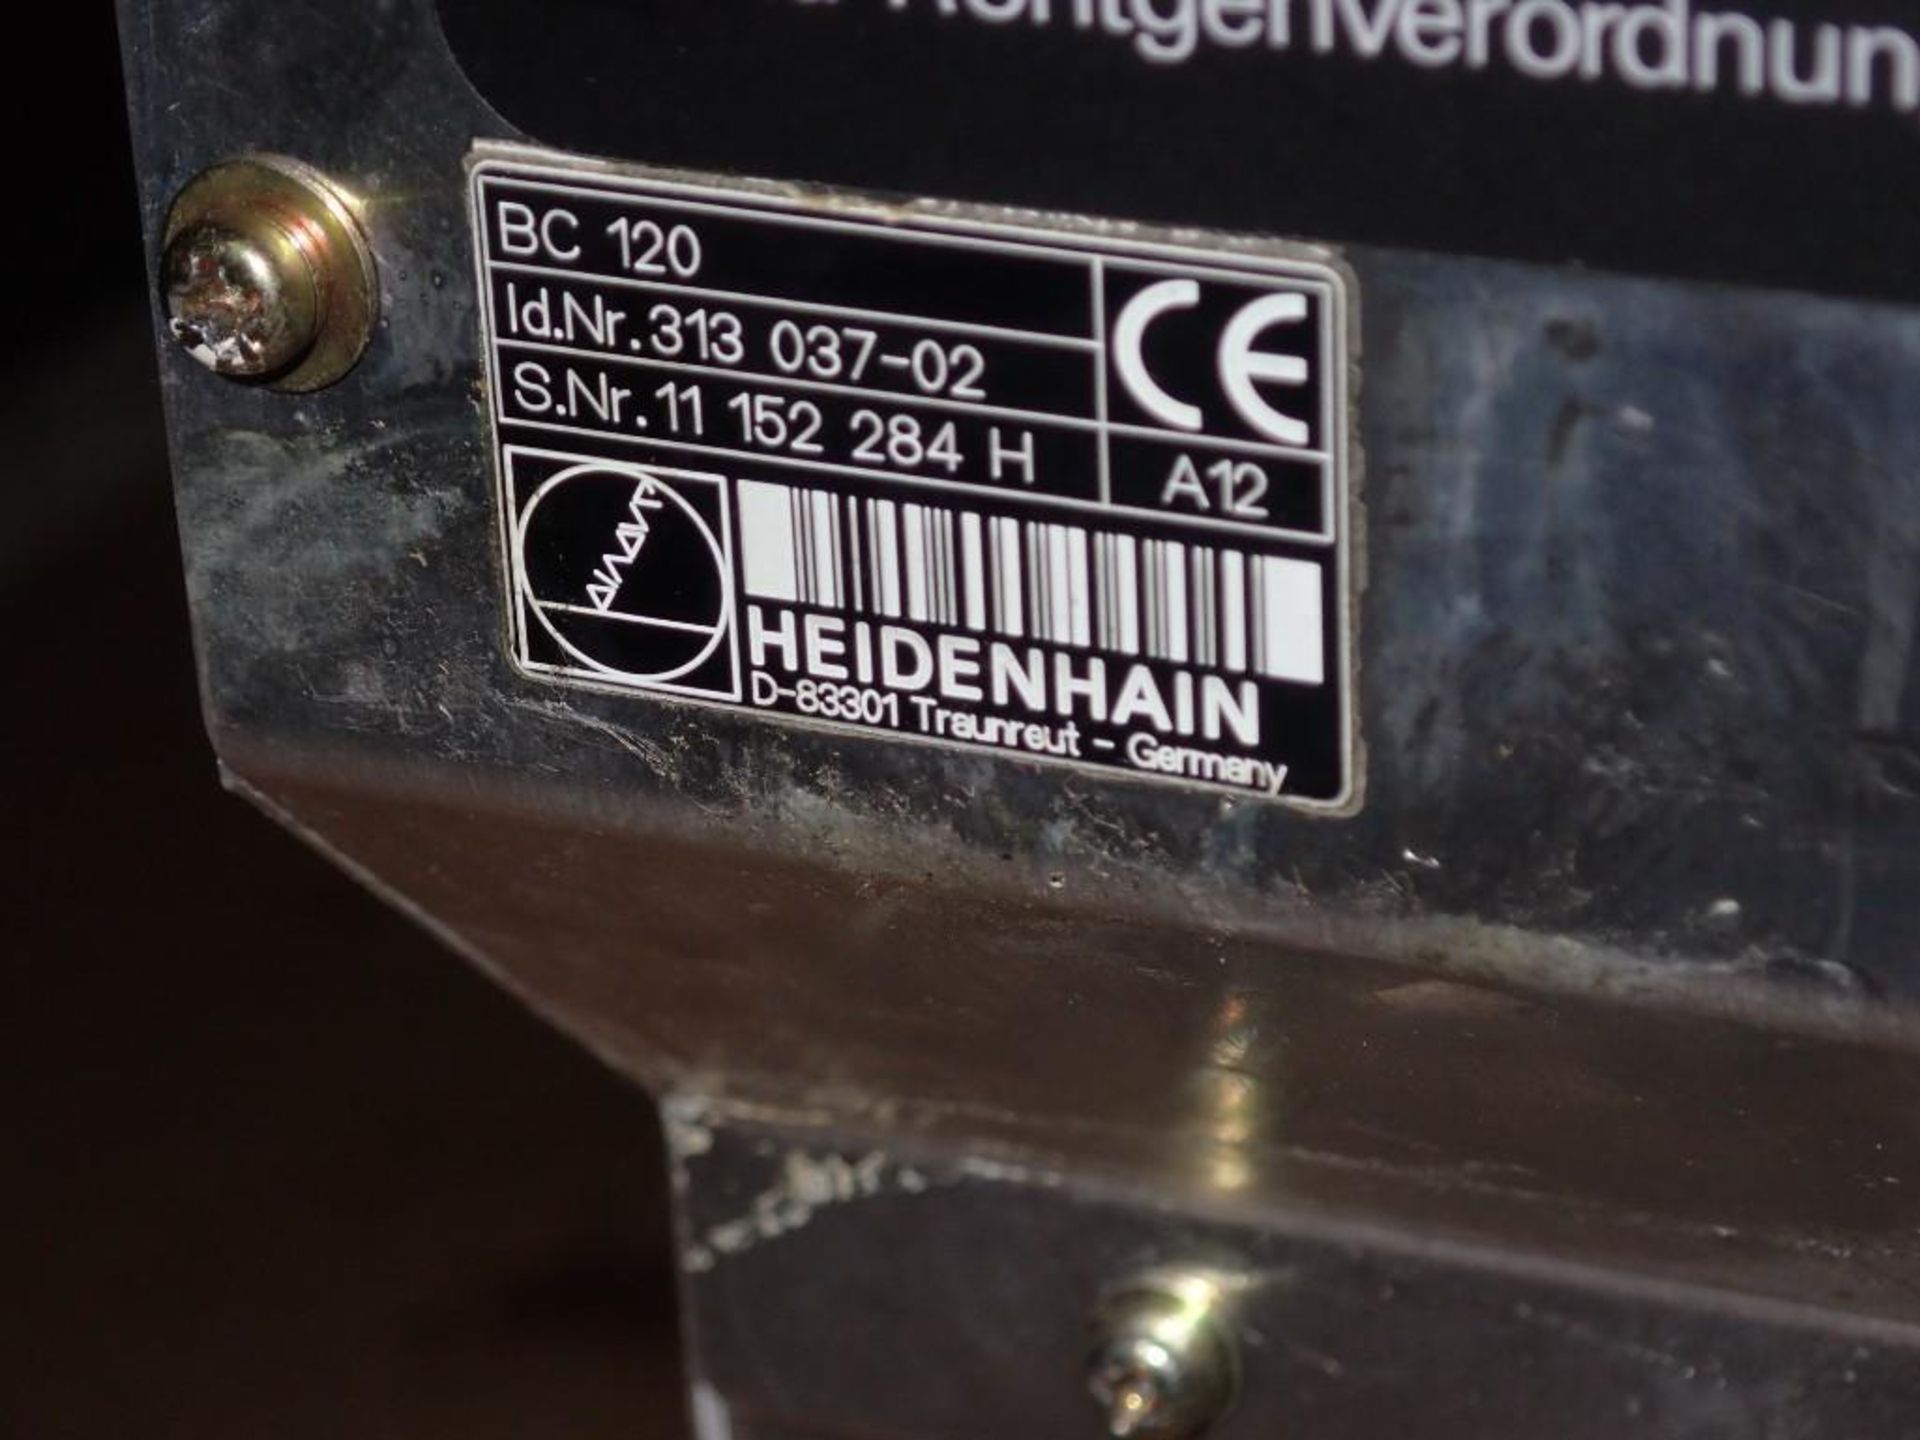 Heidenhain BC120 Monitor Assembly ID#313 037-02 - Image 4 of 5